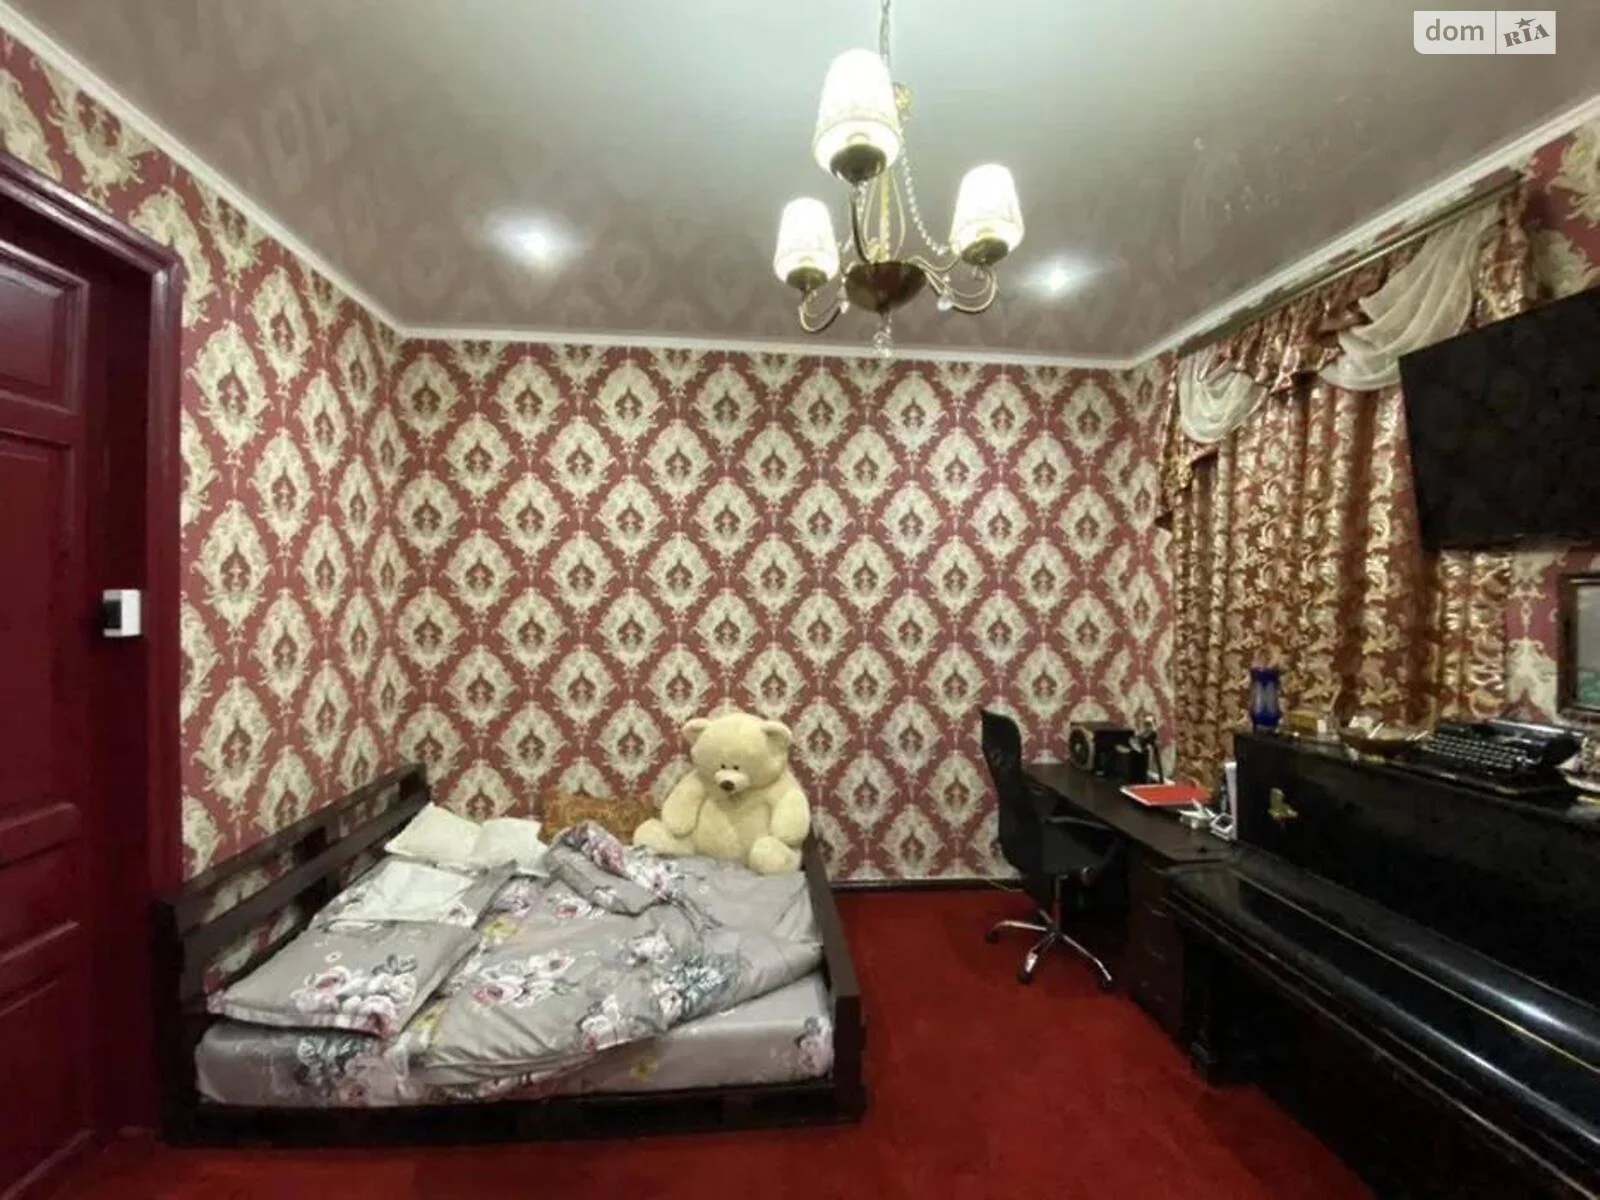 Продается комната 127 кв. м в Одессе, цена: 37000 $ - фото 1